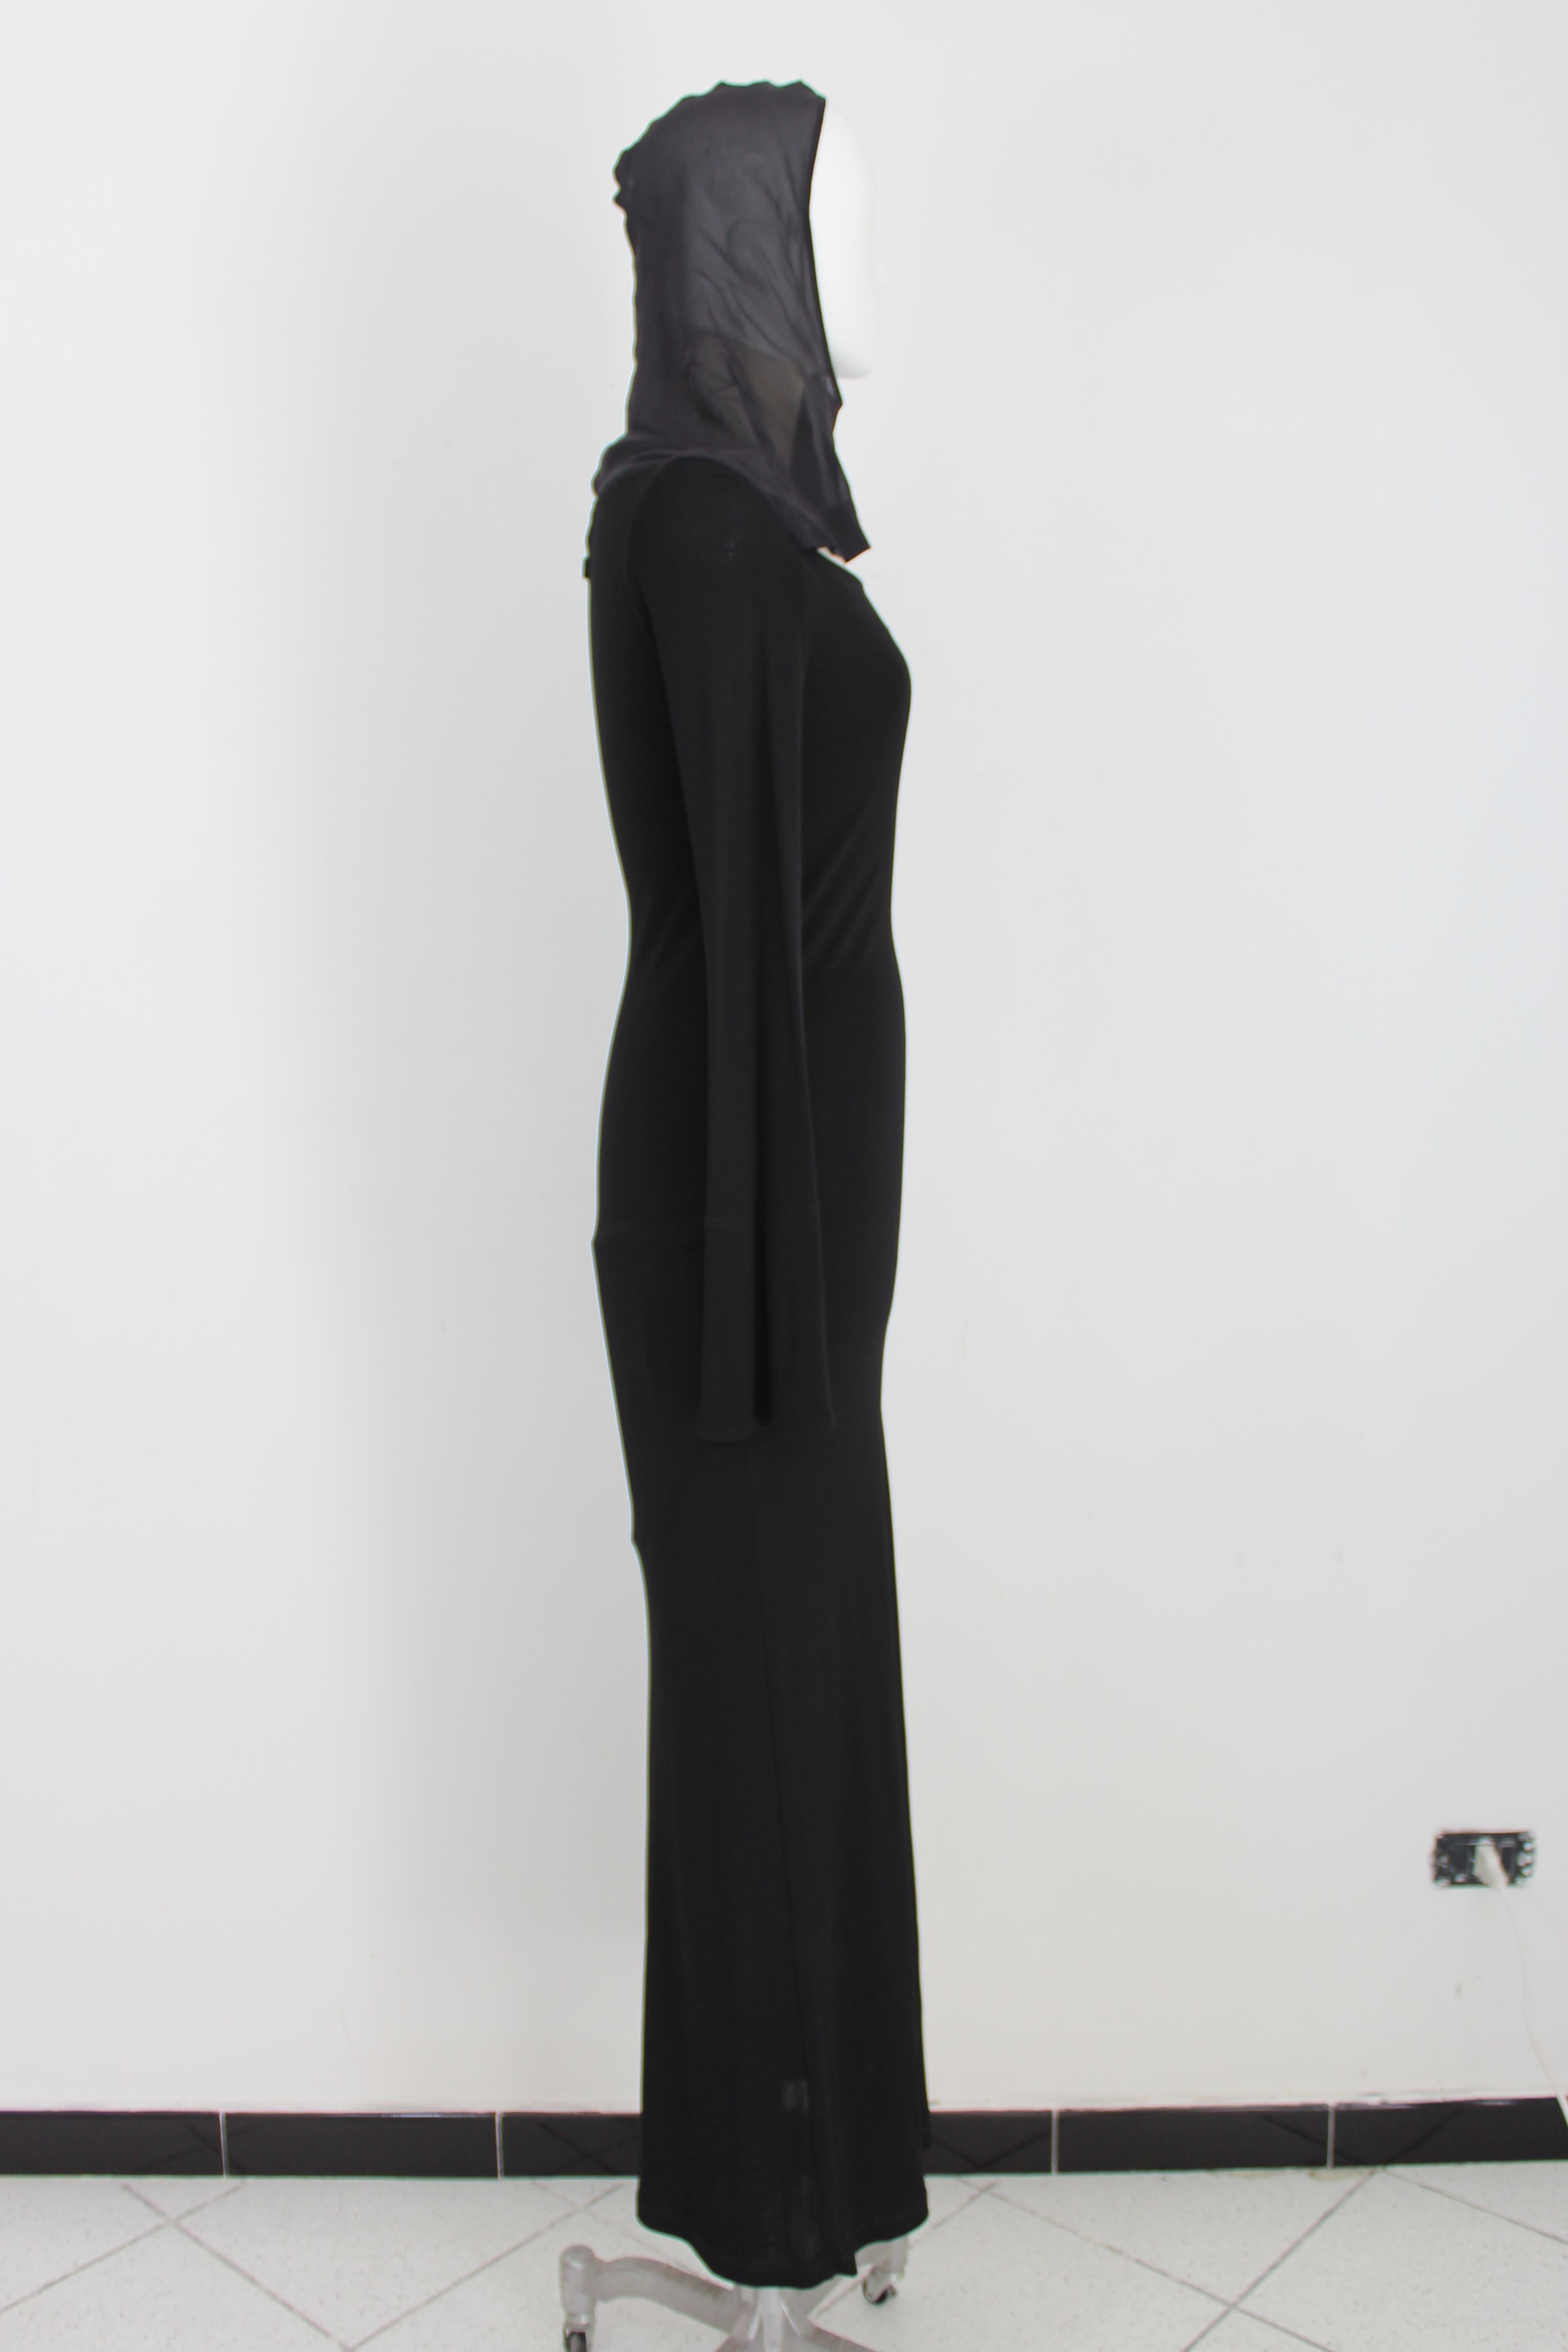 Jean Paul Gaultier Black Silk Bodycon Long Evening Dress 2000s  1